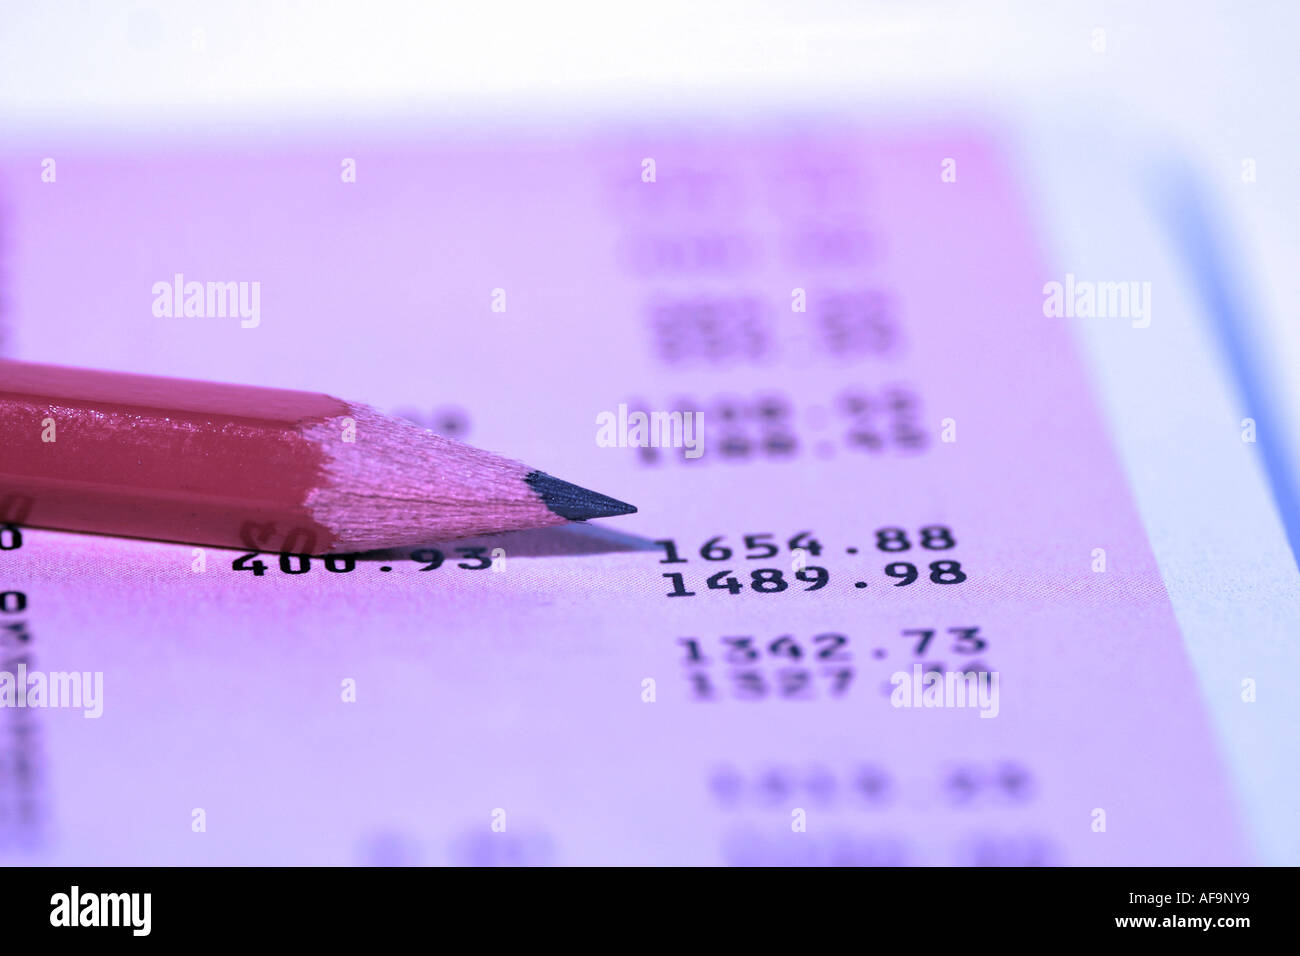 A Stock Photograph of A Pencil Next To Financial Figures Stock Photo